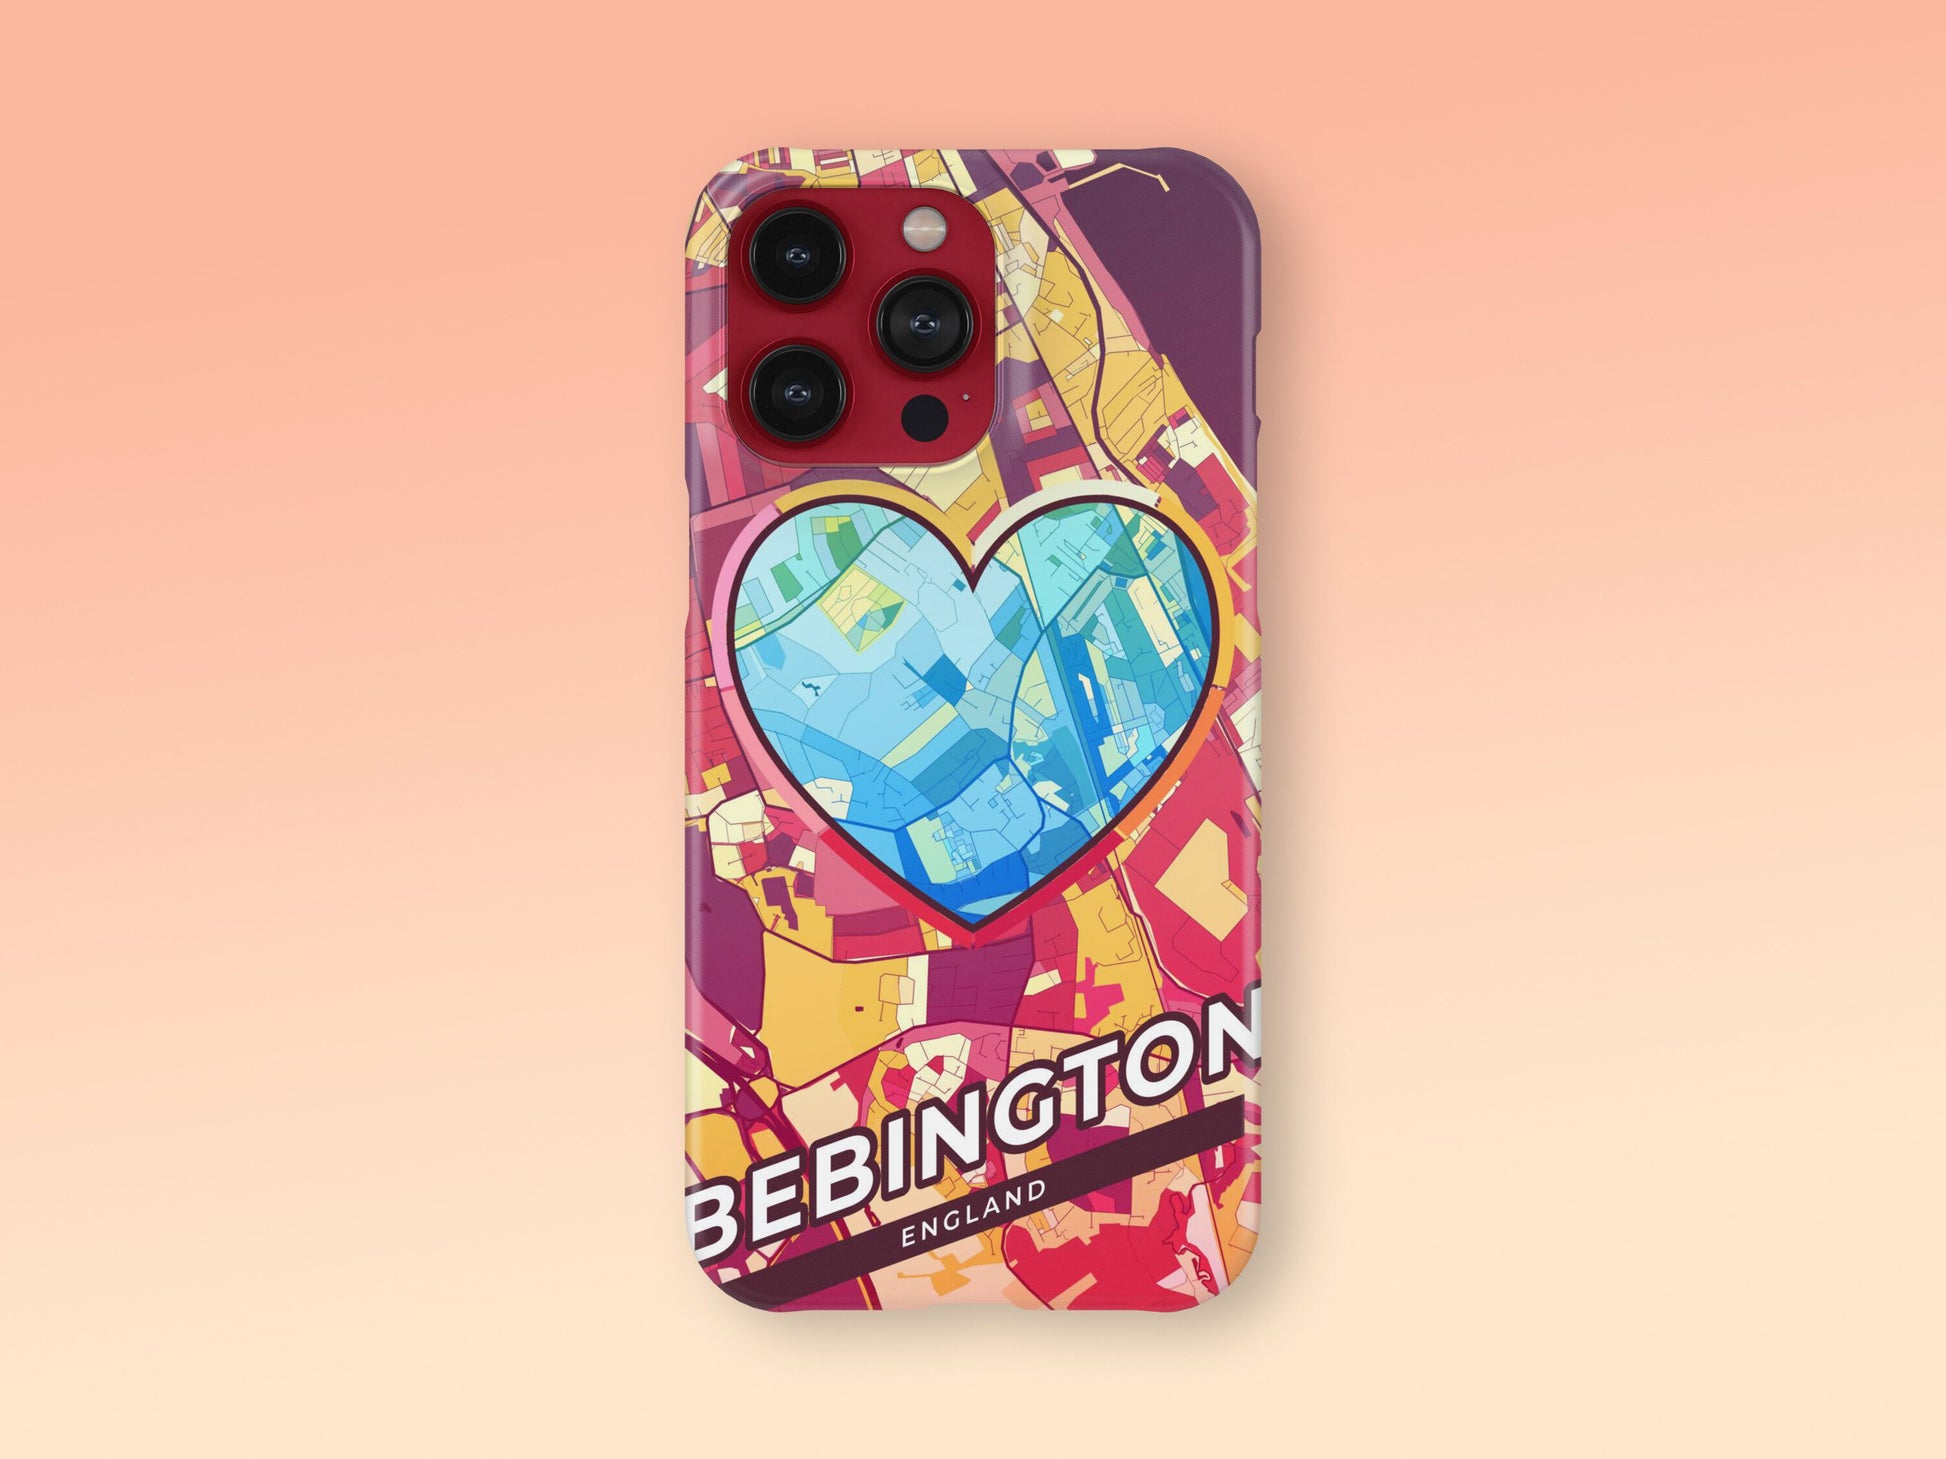 Bebington England slim phone case with colorful icon. Birthday, wedding or housewarming gift. Couple match cases. 2